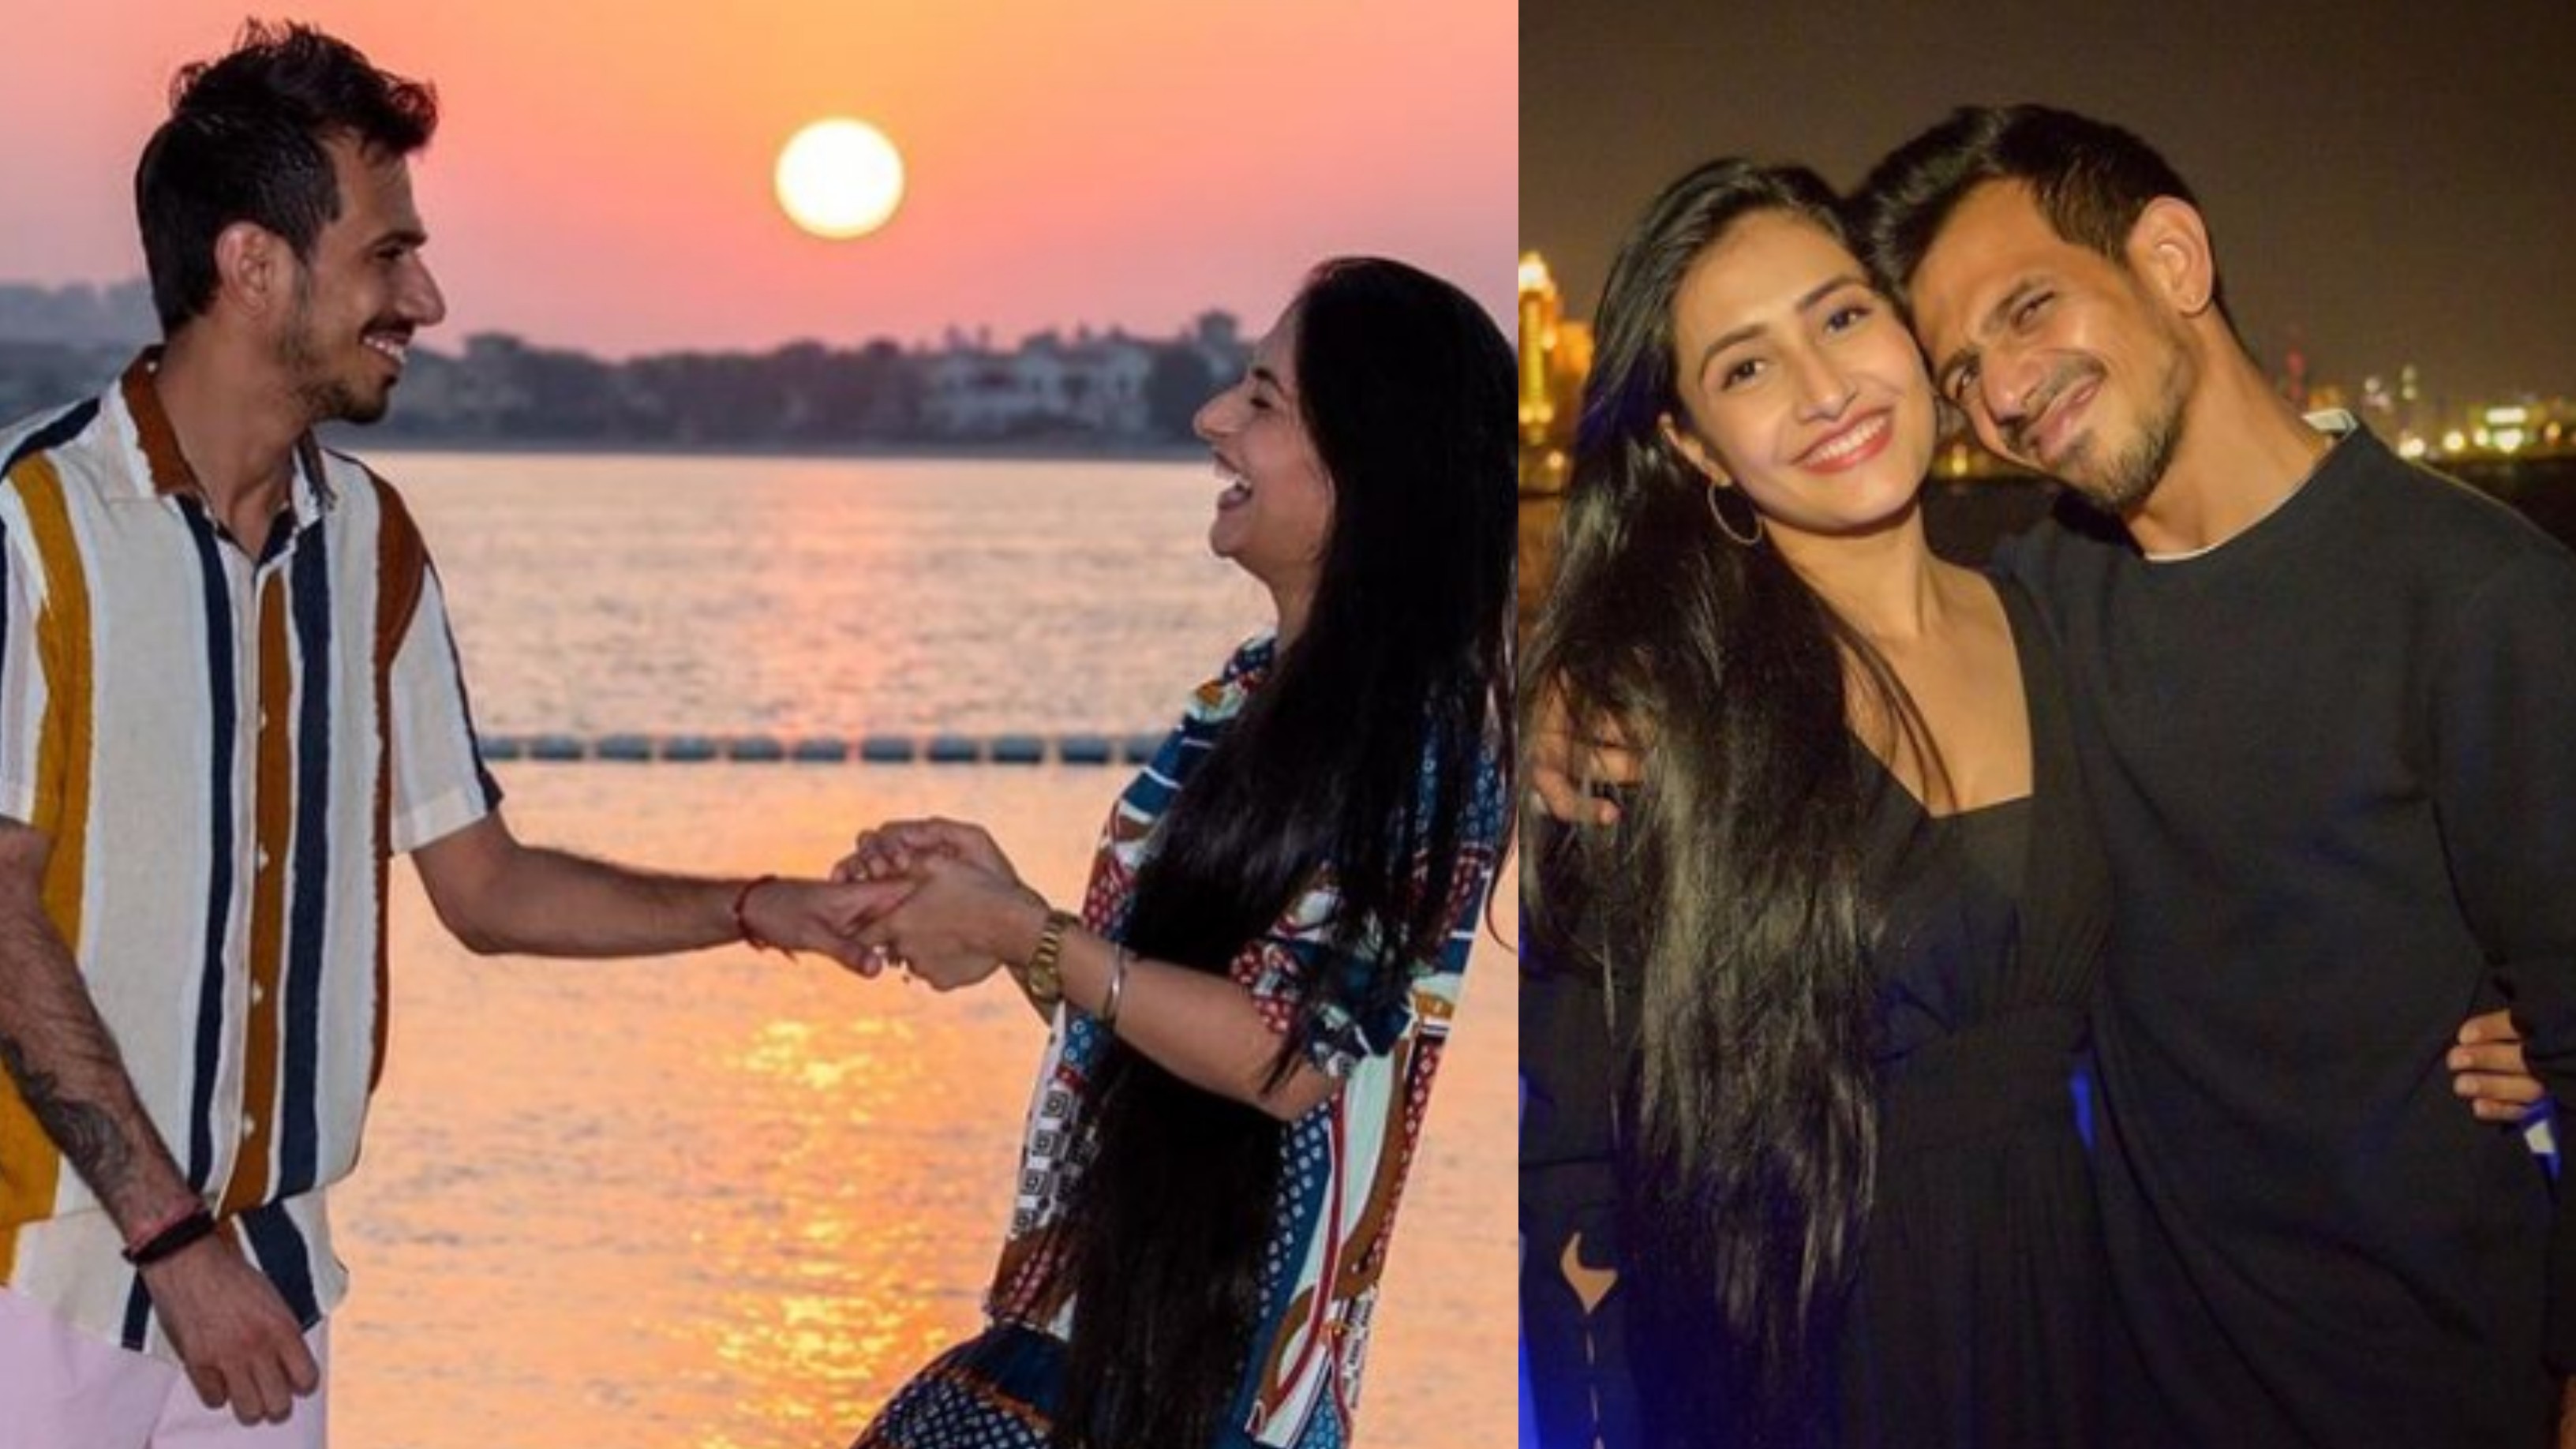 Yuzvendra Chahal shares romantic photo with fiancee Dhanashree Verma